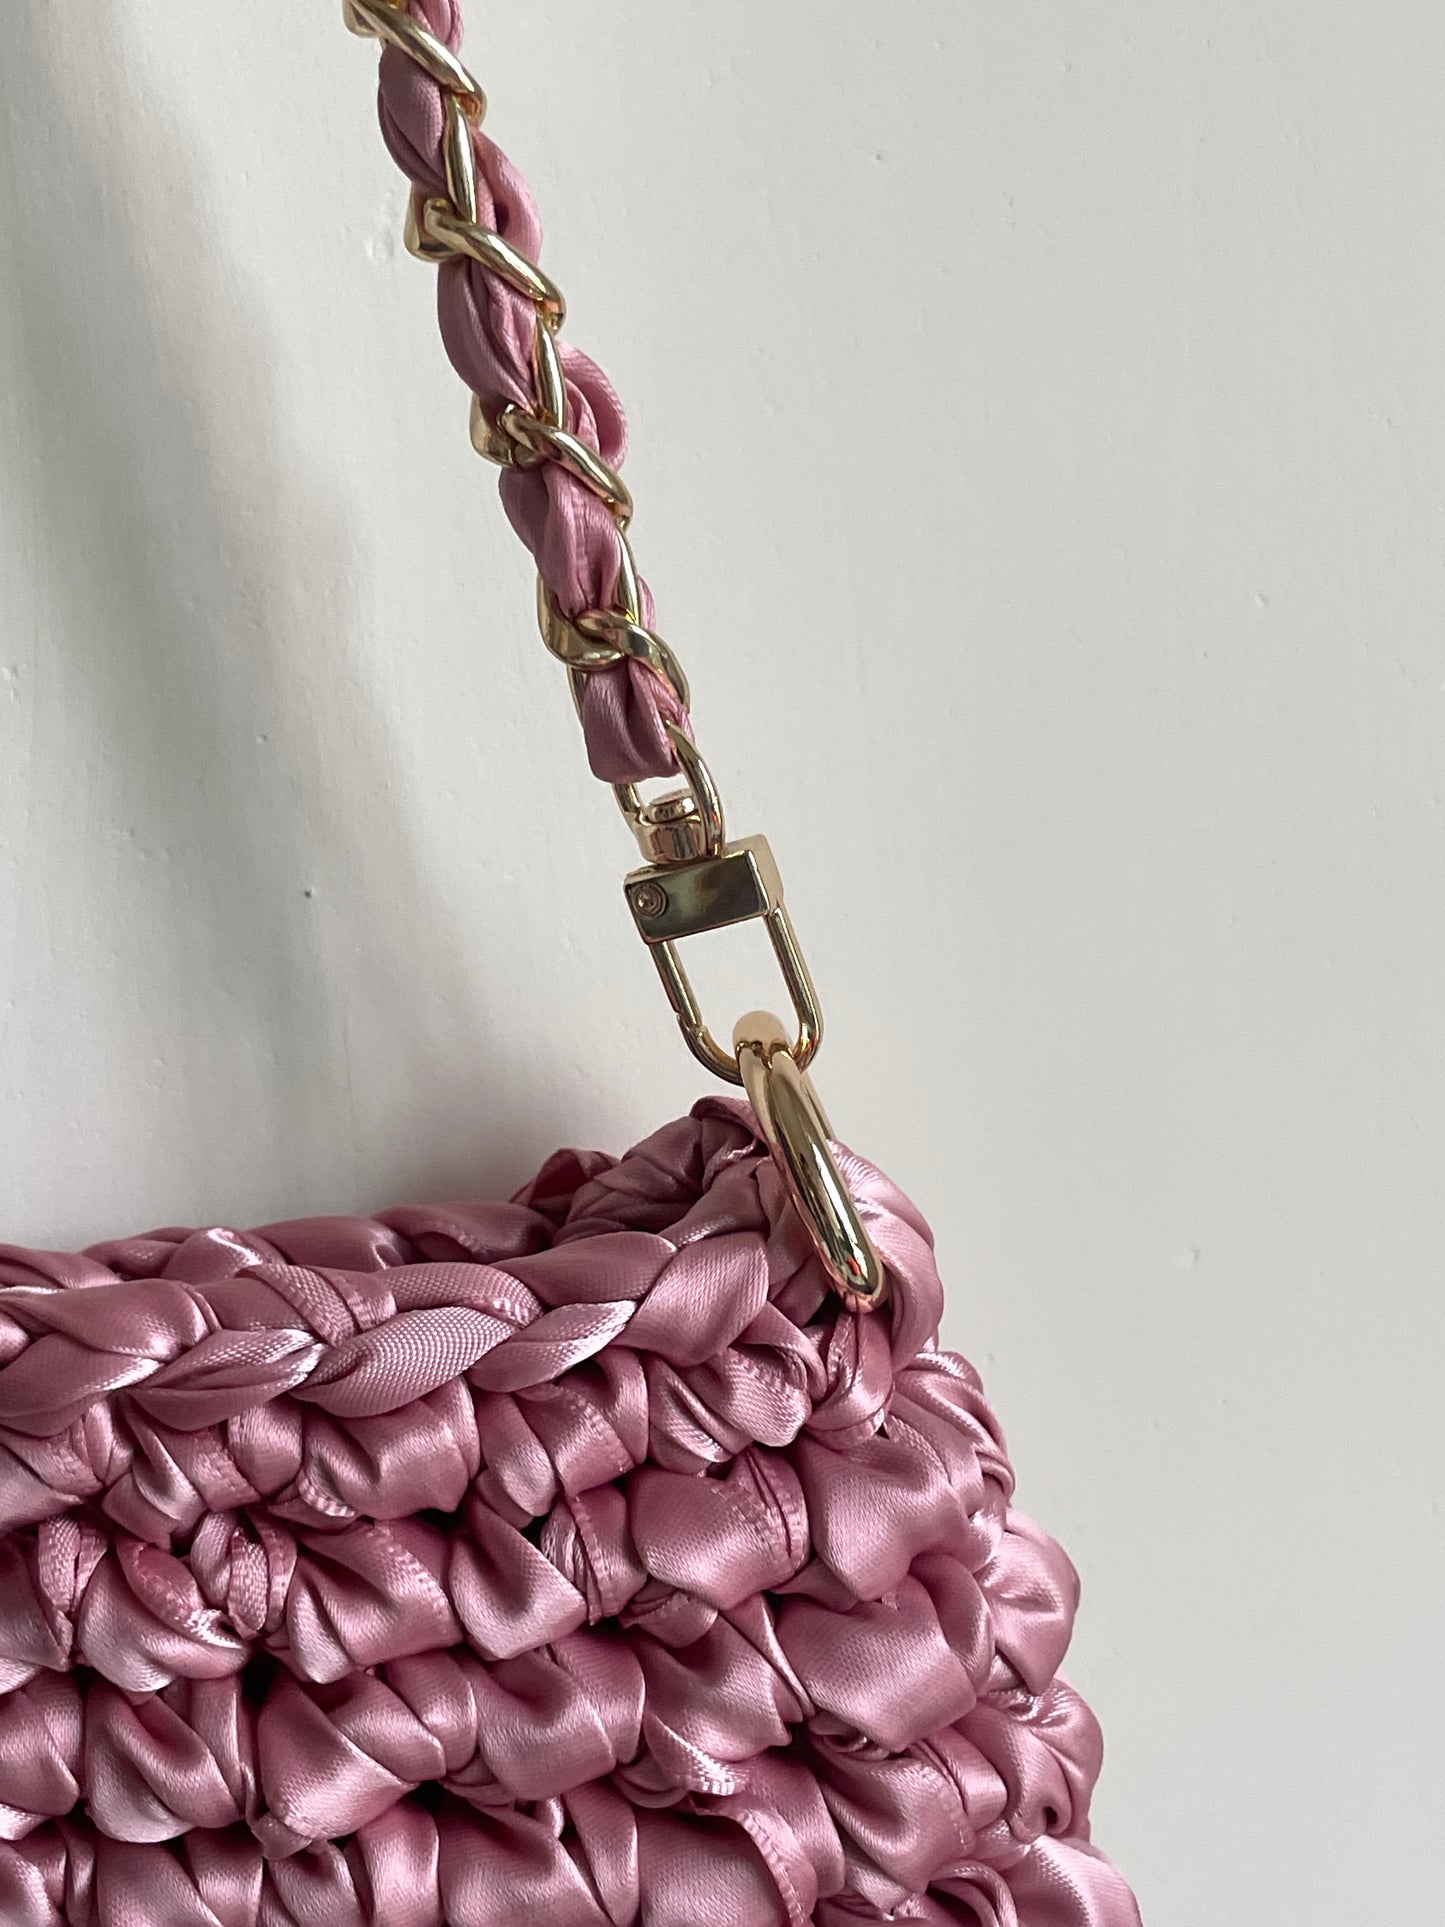 Ribbon Crochet Chain Bag Small Pink [BOOYAH.MADE] [現貨]